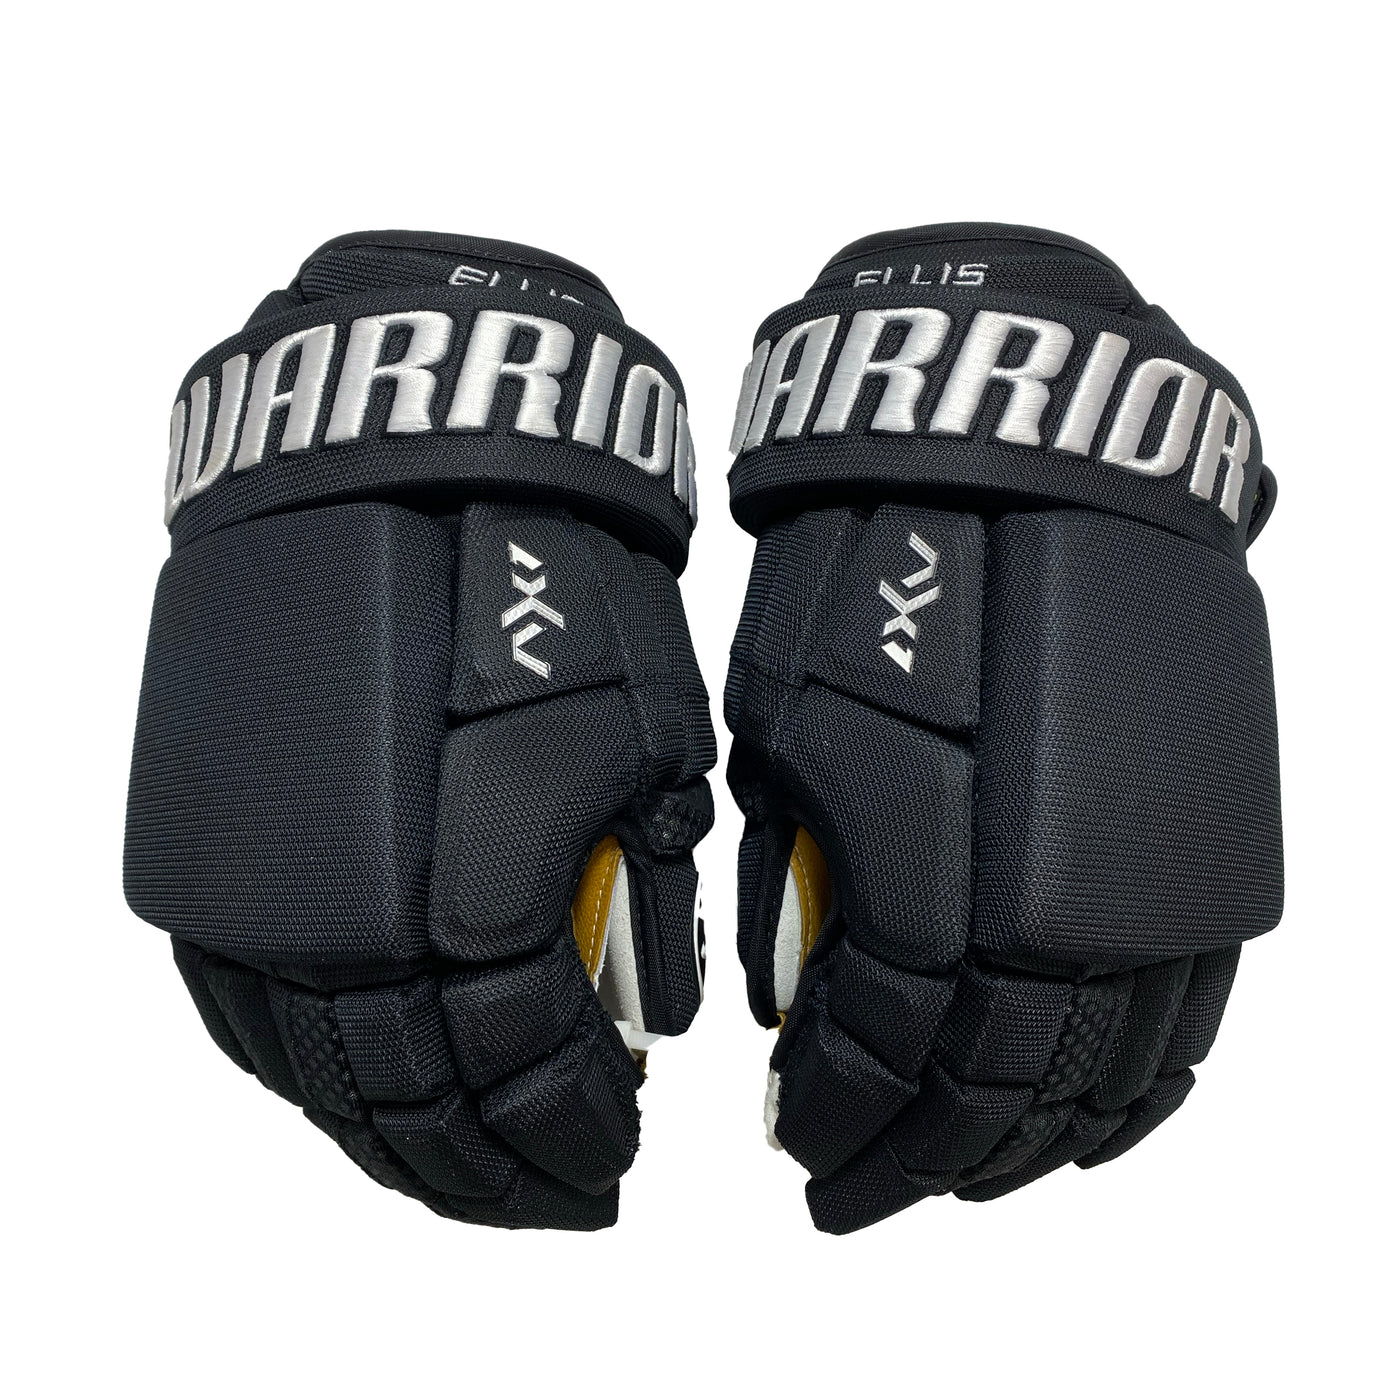 Warrior Dynasty AX1 - Philadelphia Flyers - Pro Stock Glove - Ryan Ellis